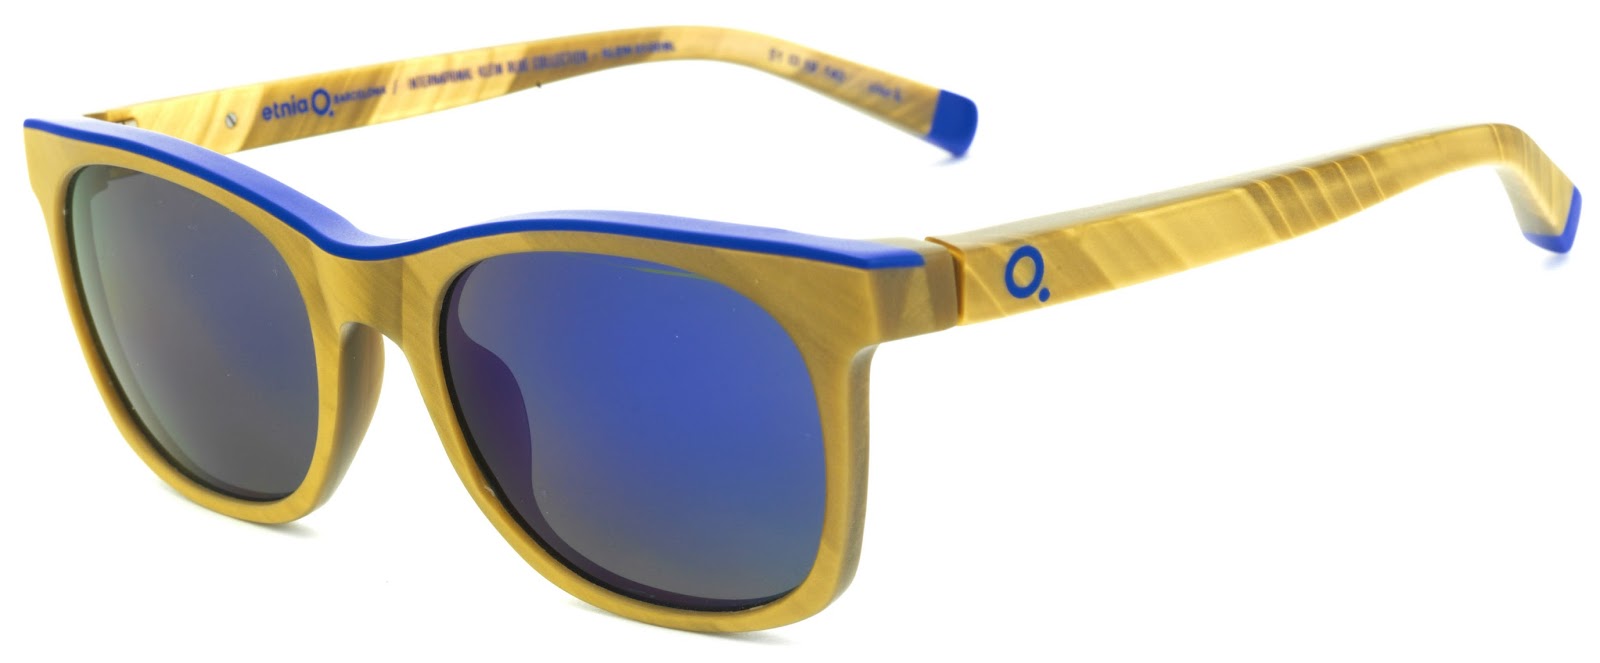 International Klein Blue Sunglasses by Etnia Barcelona